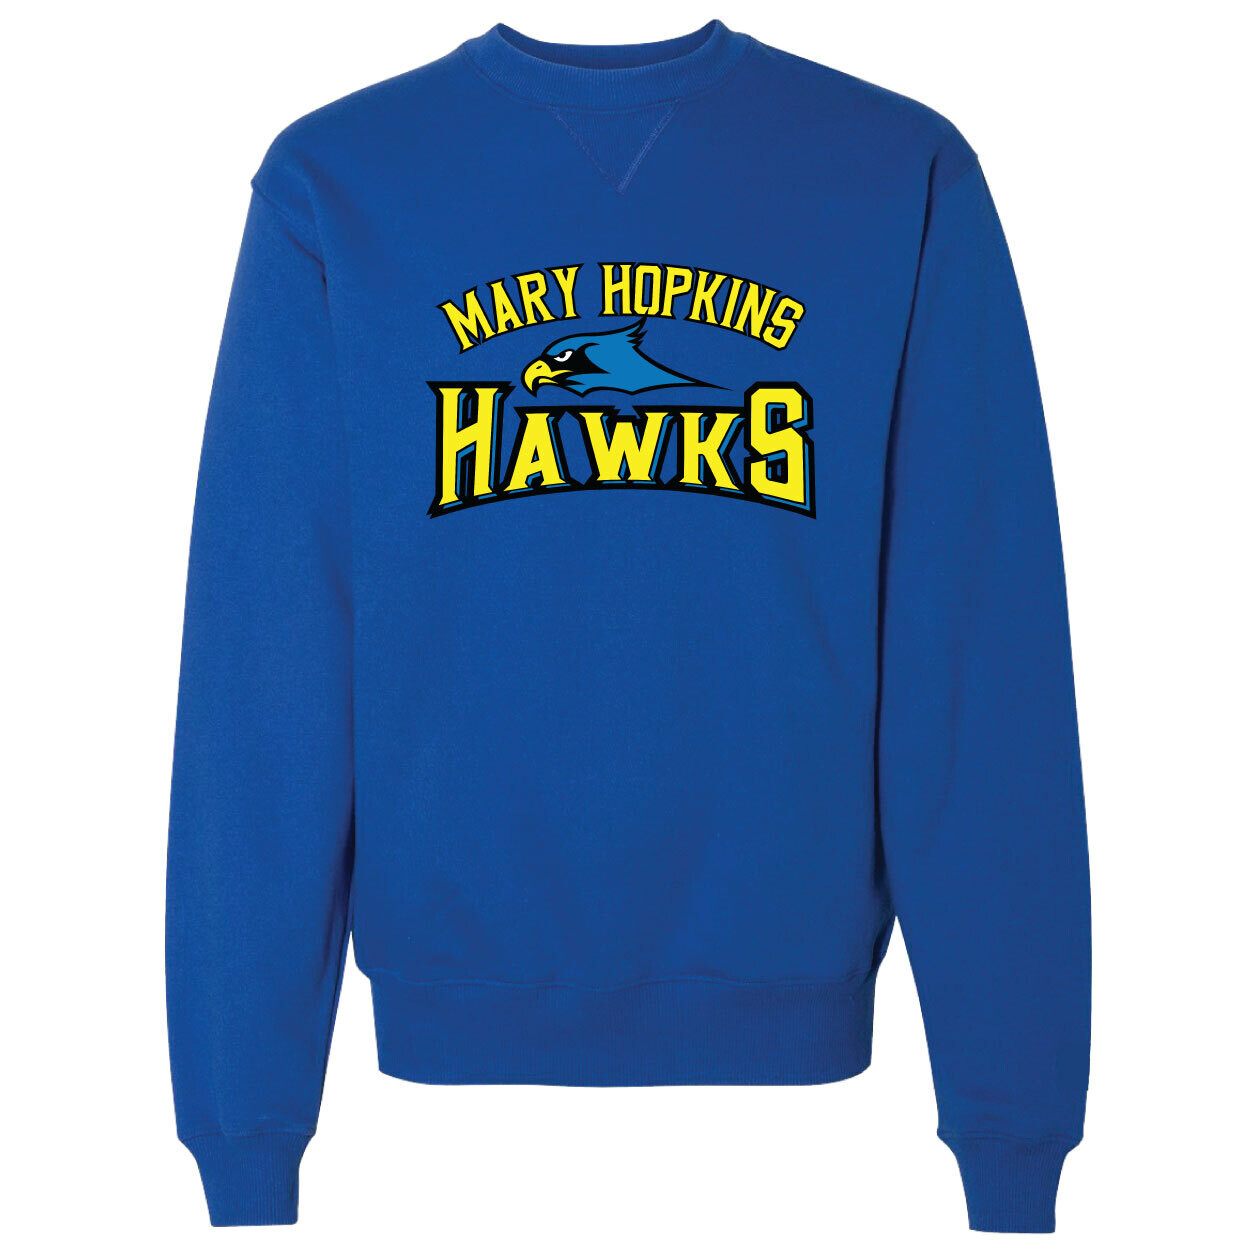 Hawks Crew Neck Sweatshirt (multi colour print)